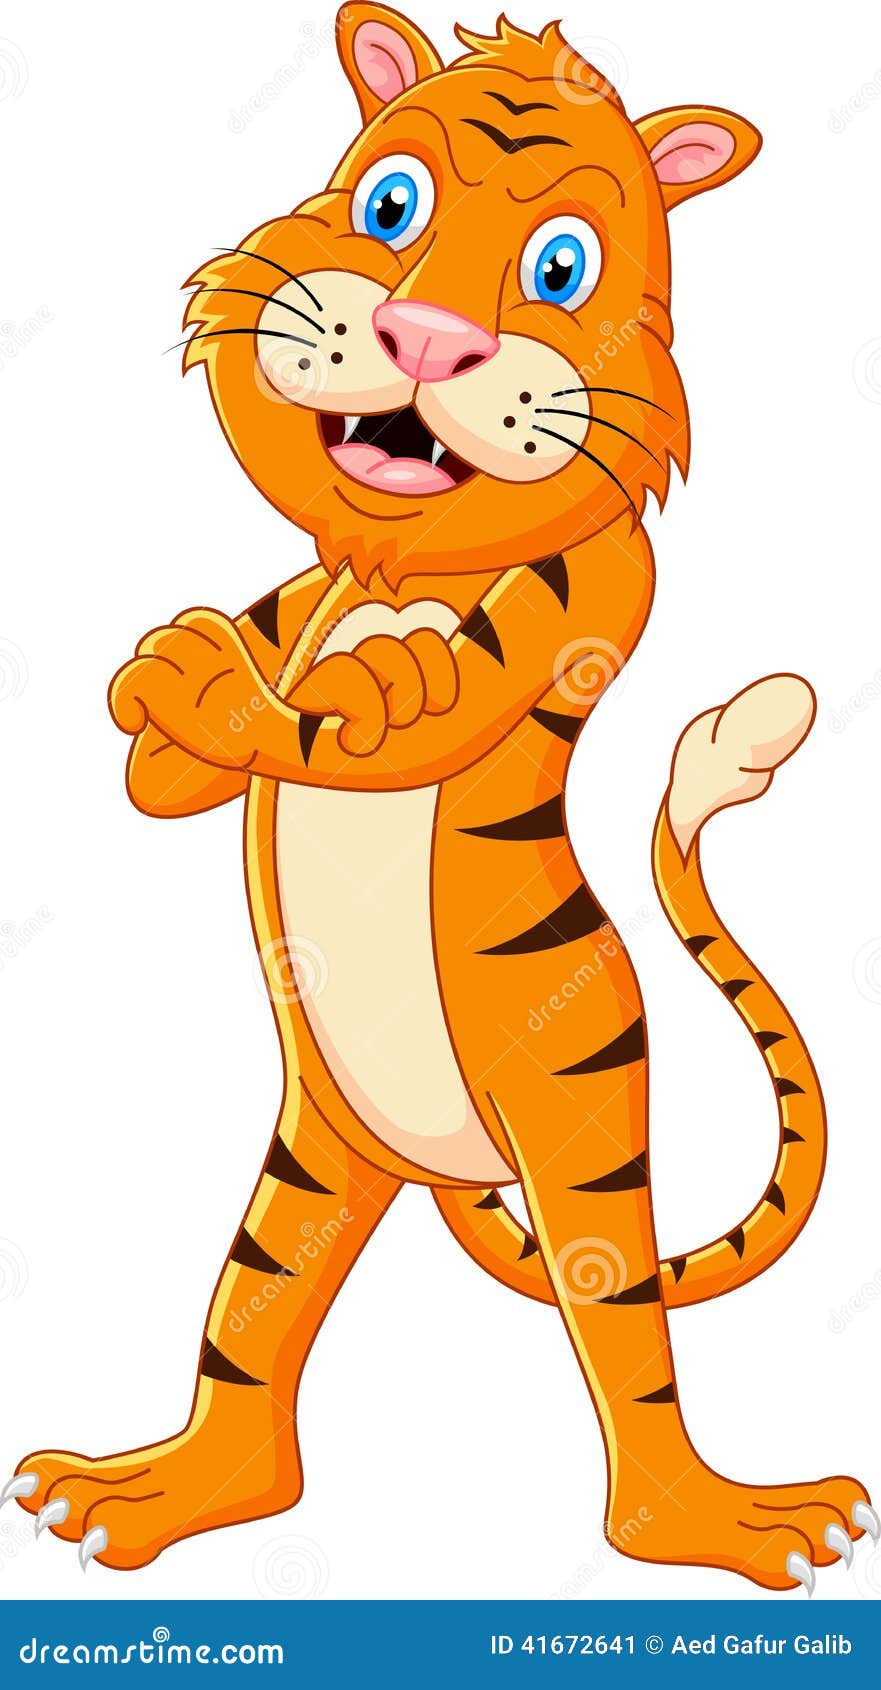 Tiger cartoon stock vector. Illustration of mischievous - 41672641